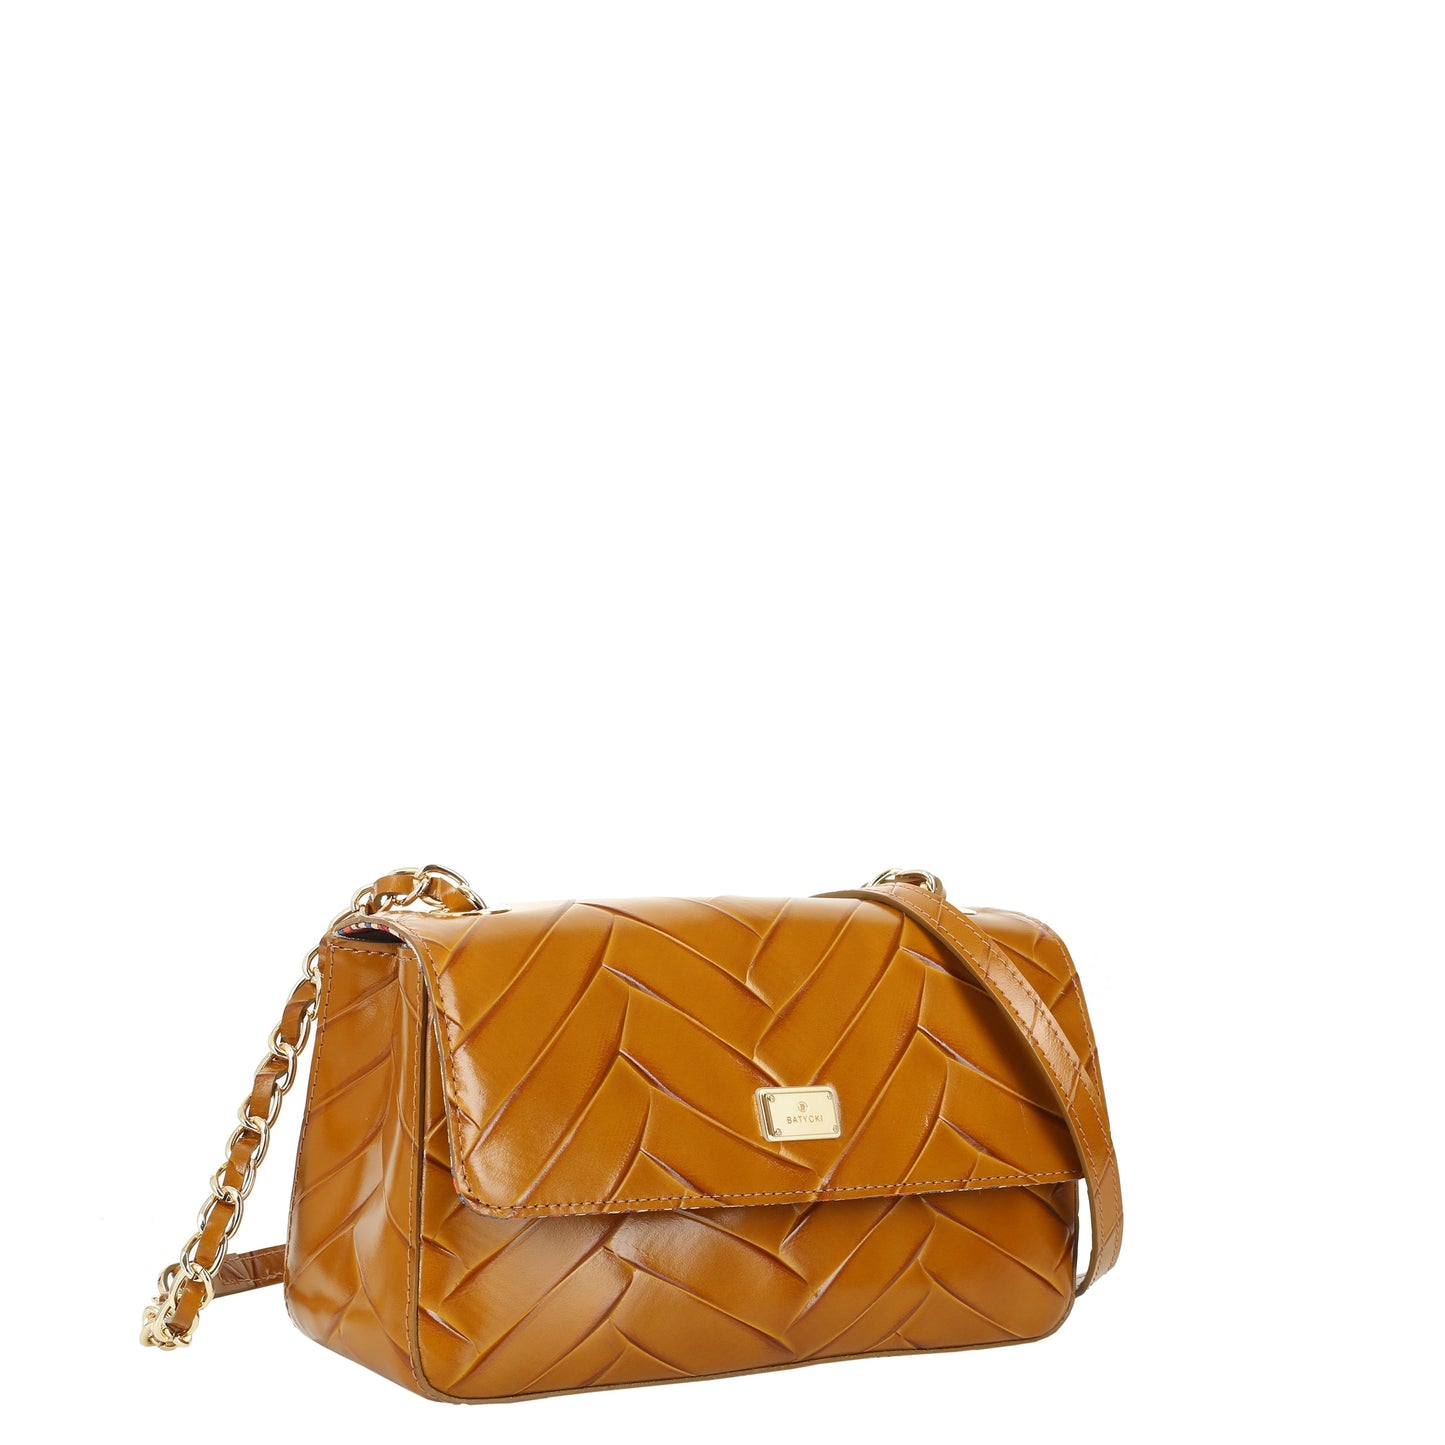 BUFFY BRAID HONEY women's leather handbag